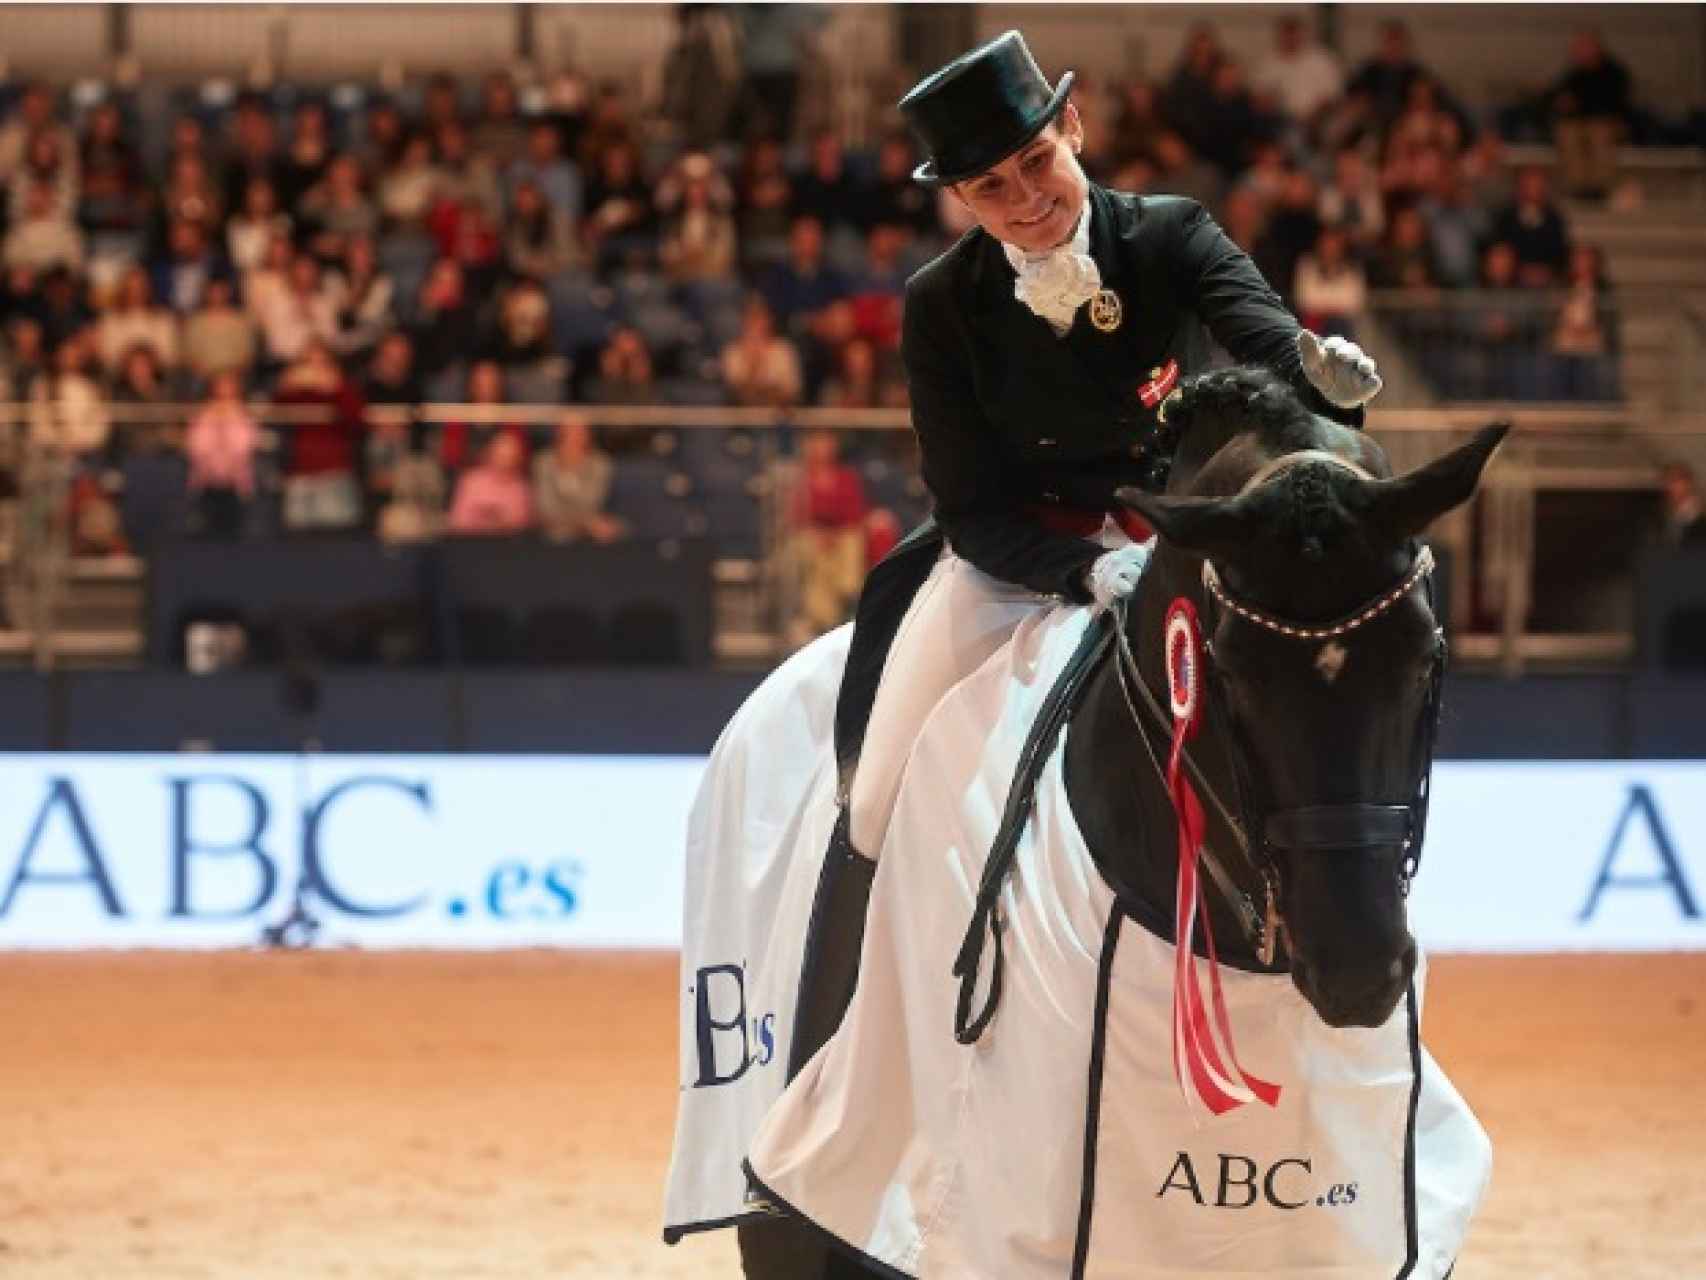 Las mejores imágenes de la tercera jornada de Madrid Horse Week.